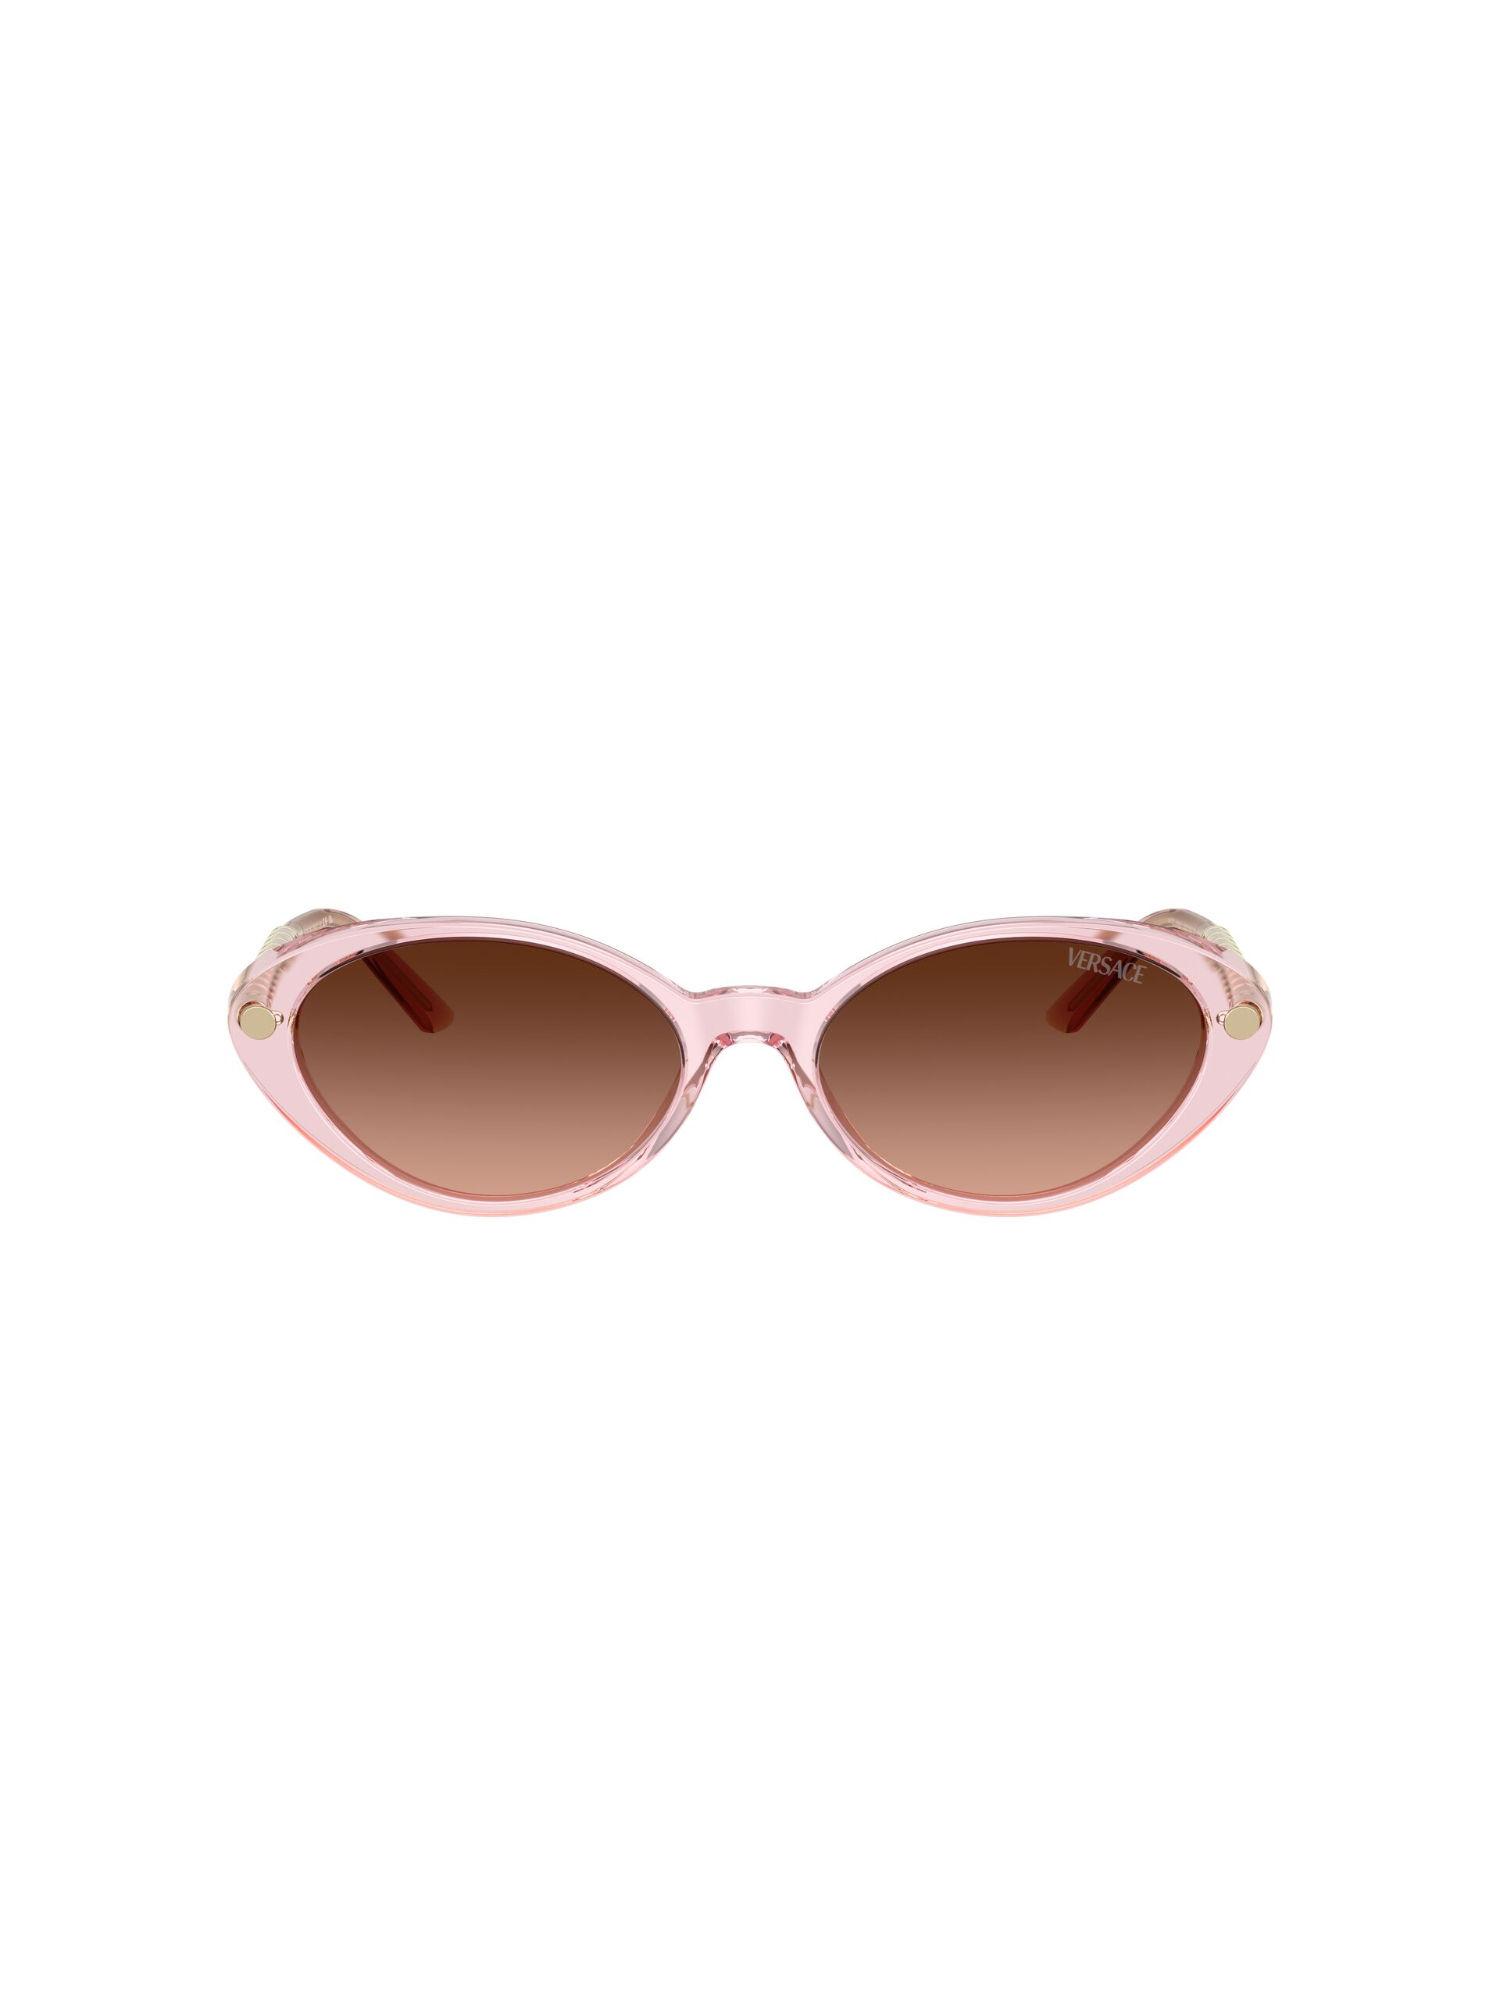 women uv protected brown lens oval sunglasses - 0ve446954725m54